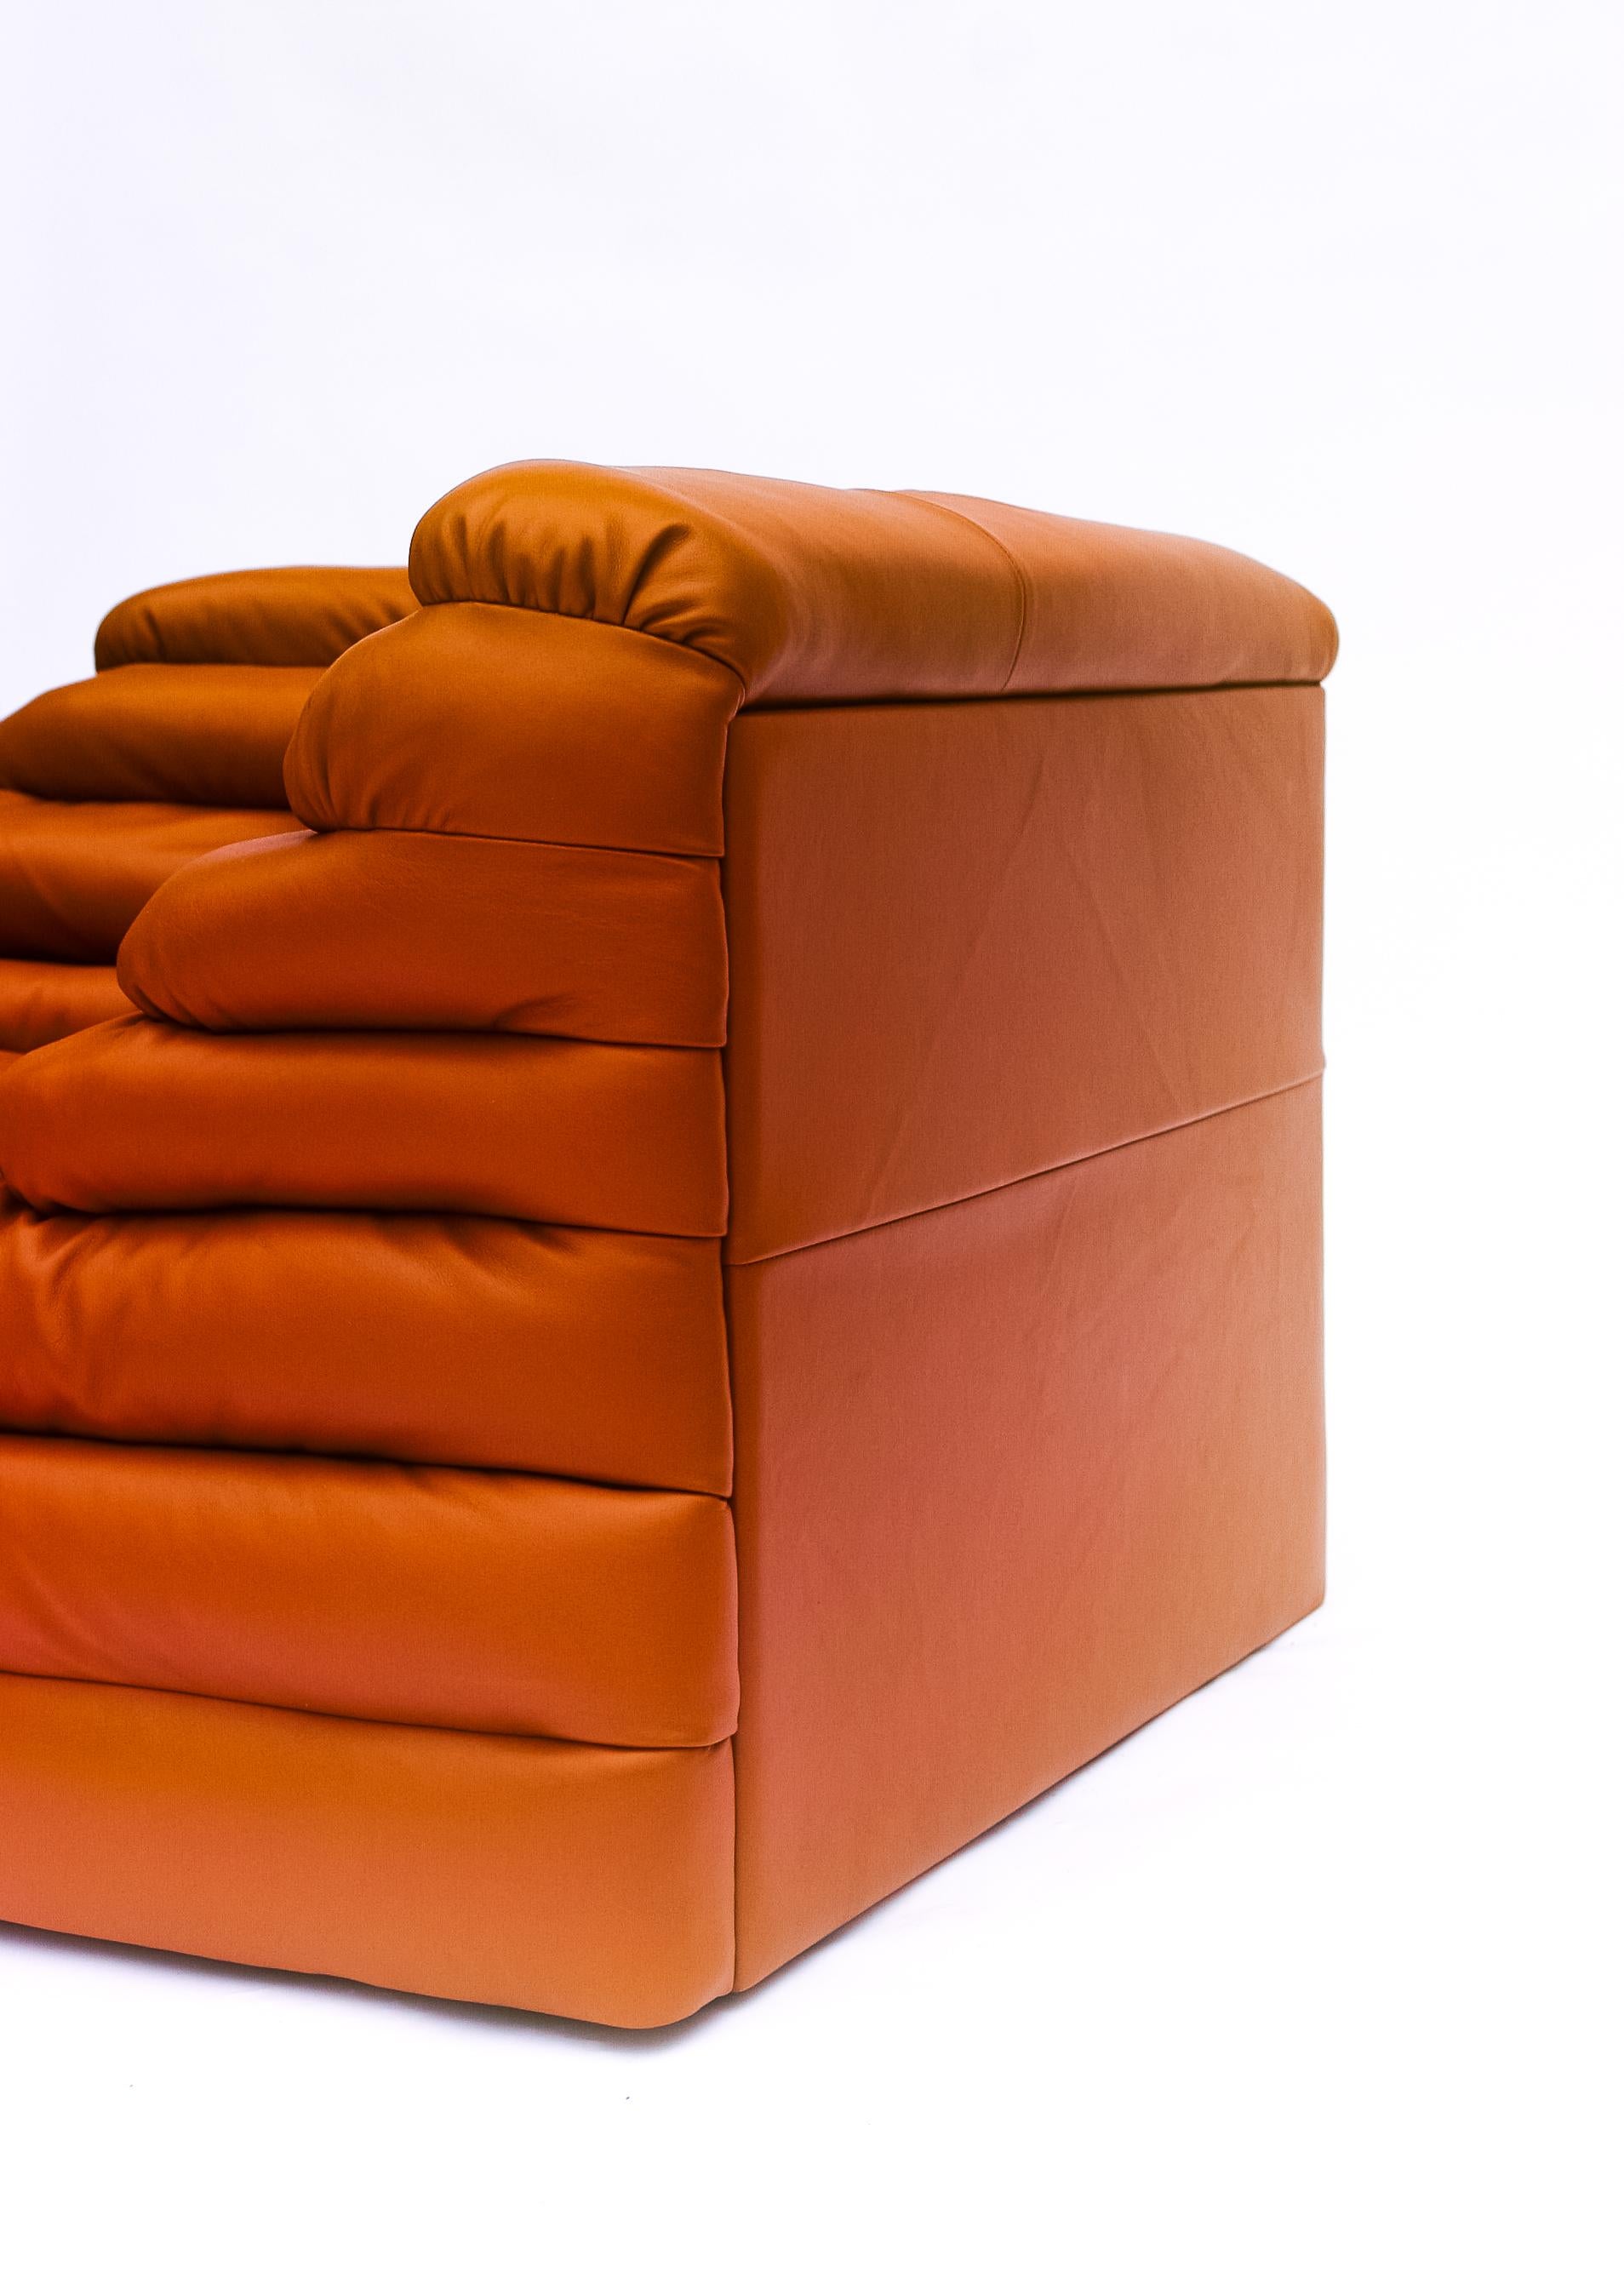 Swedish Vintage Ubald Klug Leather Terrazza Couch For Sale